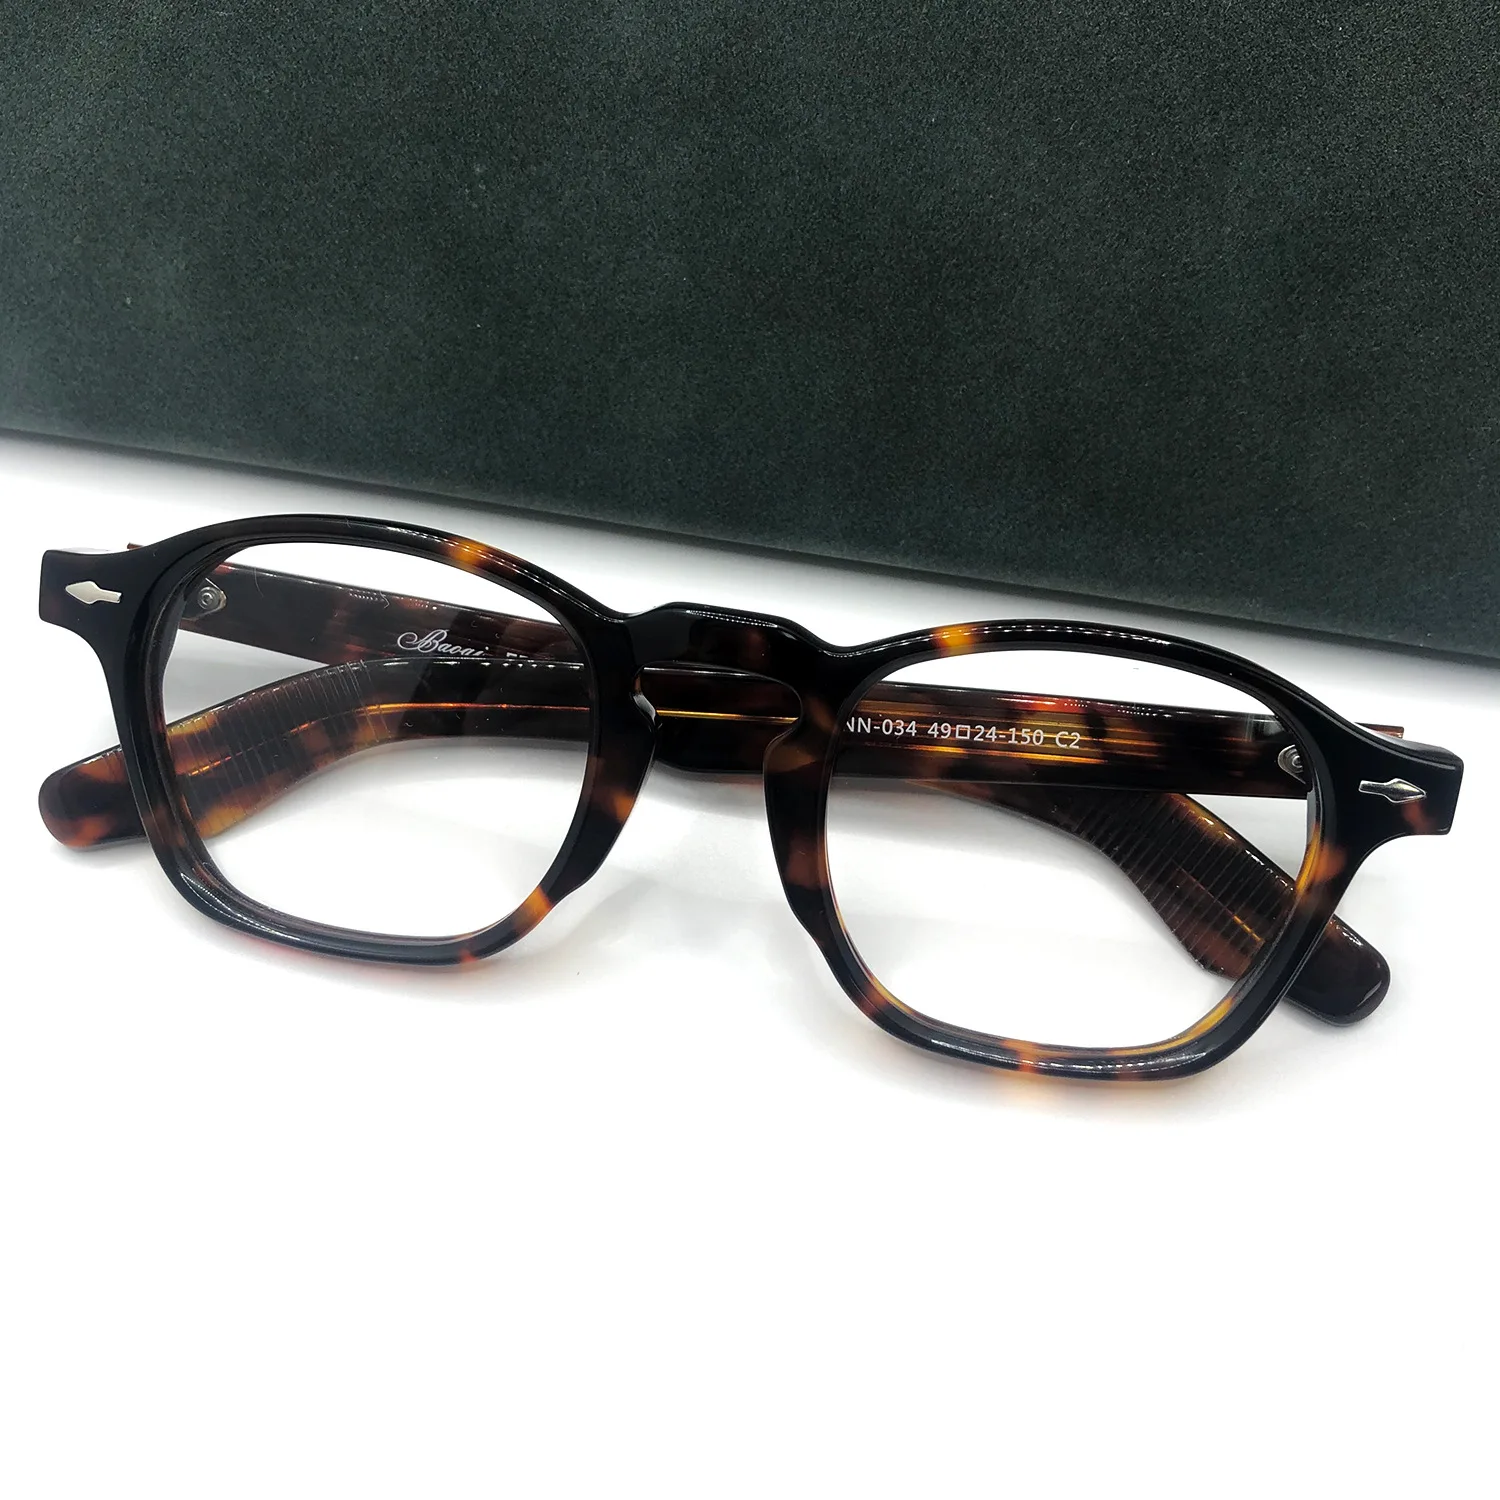 

JMM Liked Classical Vintage Top-Notch Square Glasses Frames Men Handmade Italy Acetate Prescription Luxury Brand Retro Eyeglass